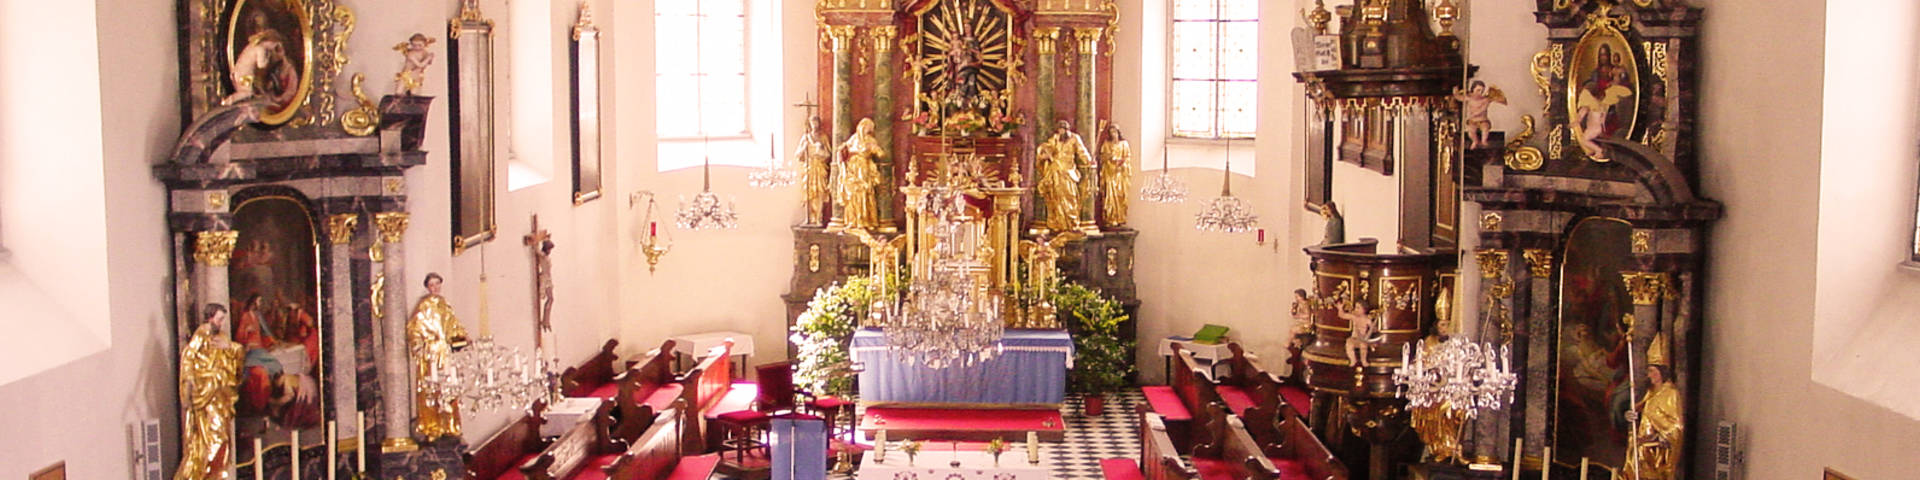 Altar in der Wallfahrtskirche Heilbrunn